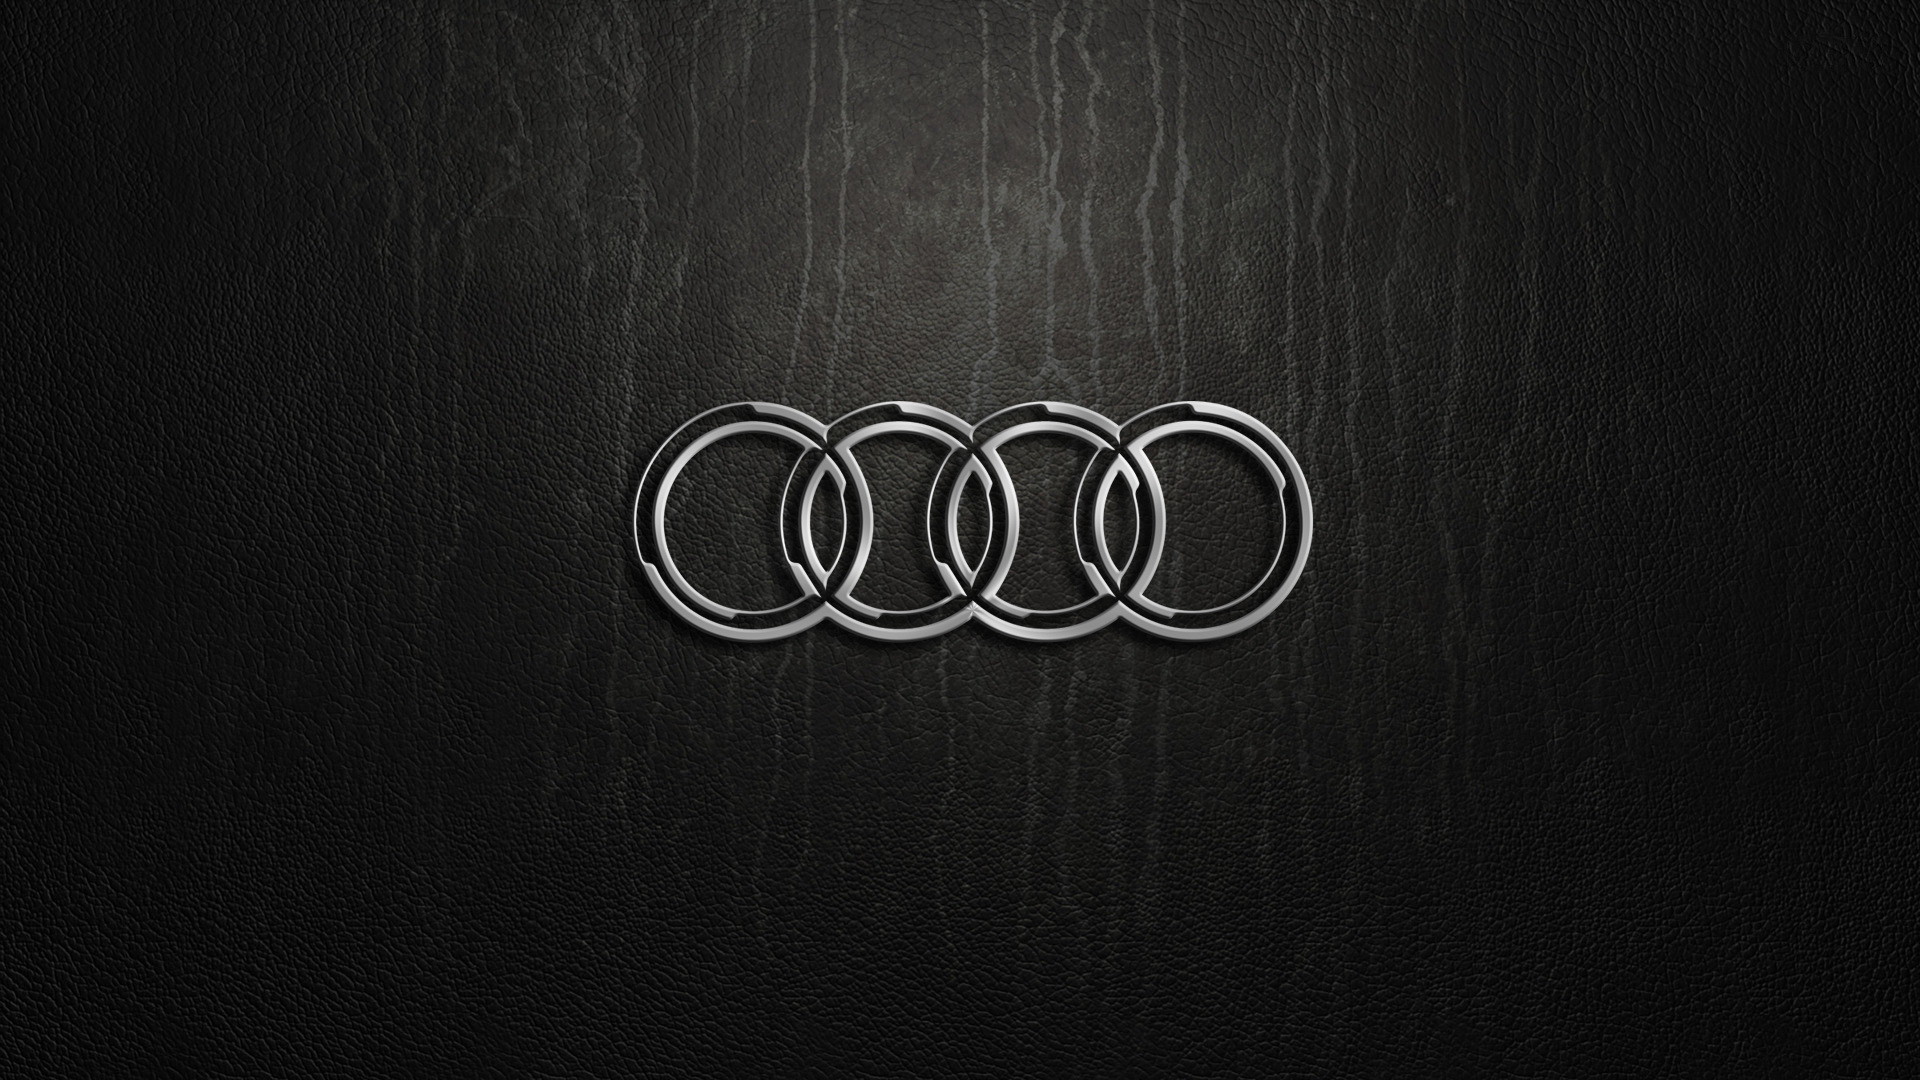 Audi Logo Full HD Wallpaper 1920×1080